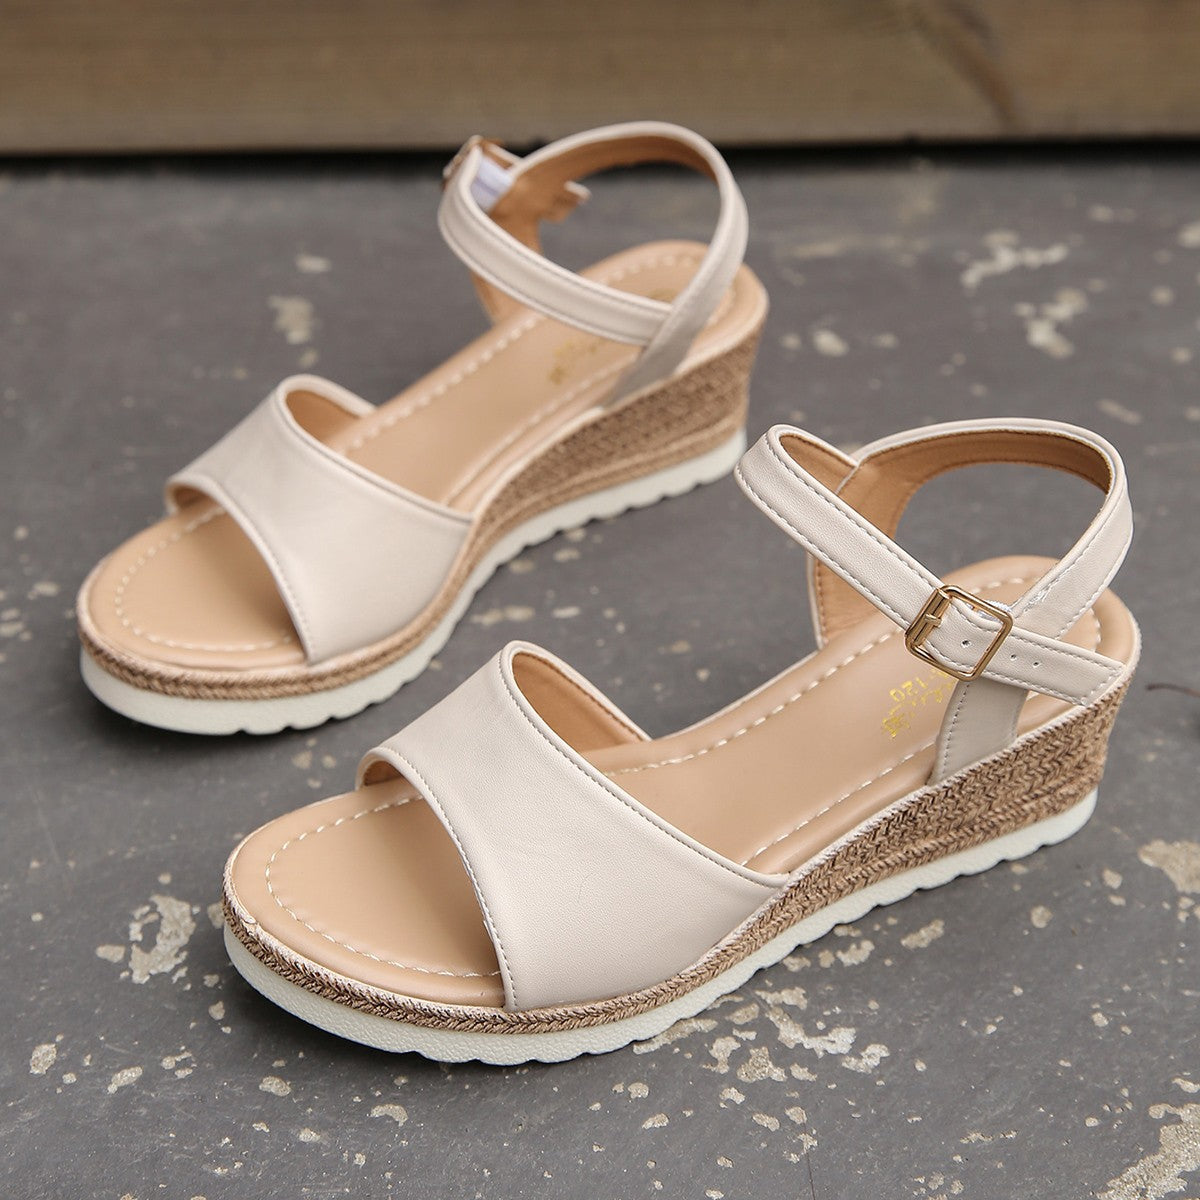 Ankle Buckle Wedges Sandals For Women Summer Platform Shoes